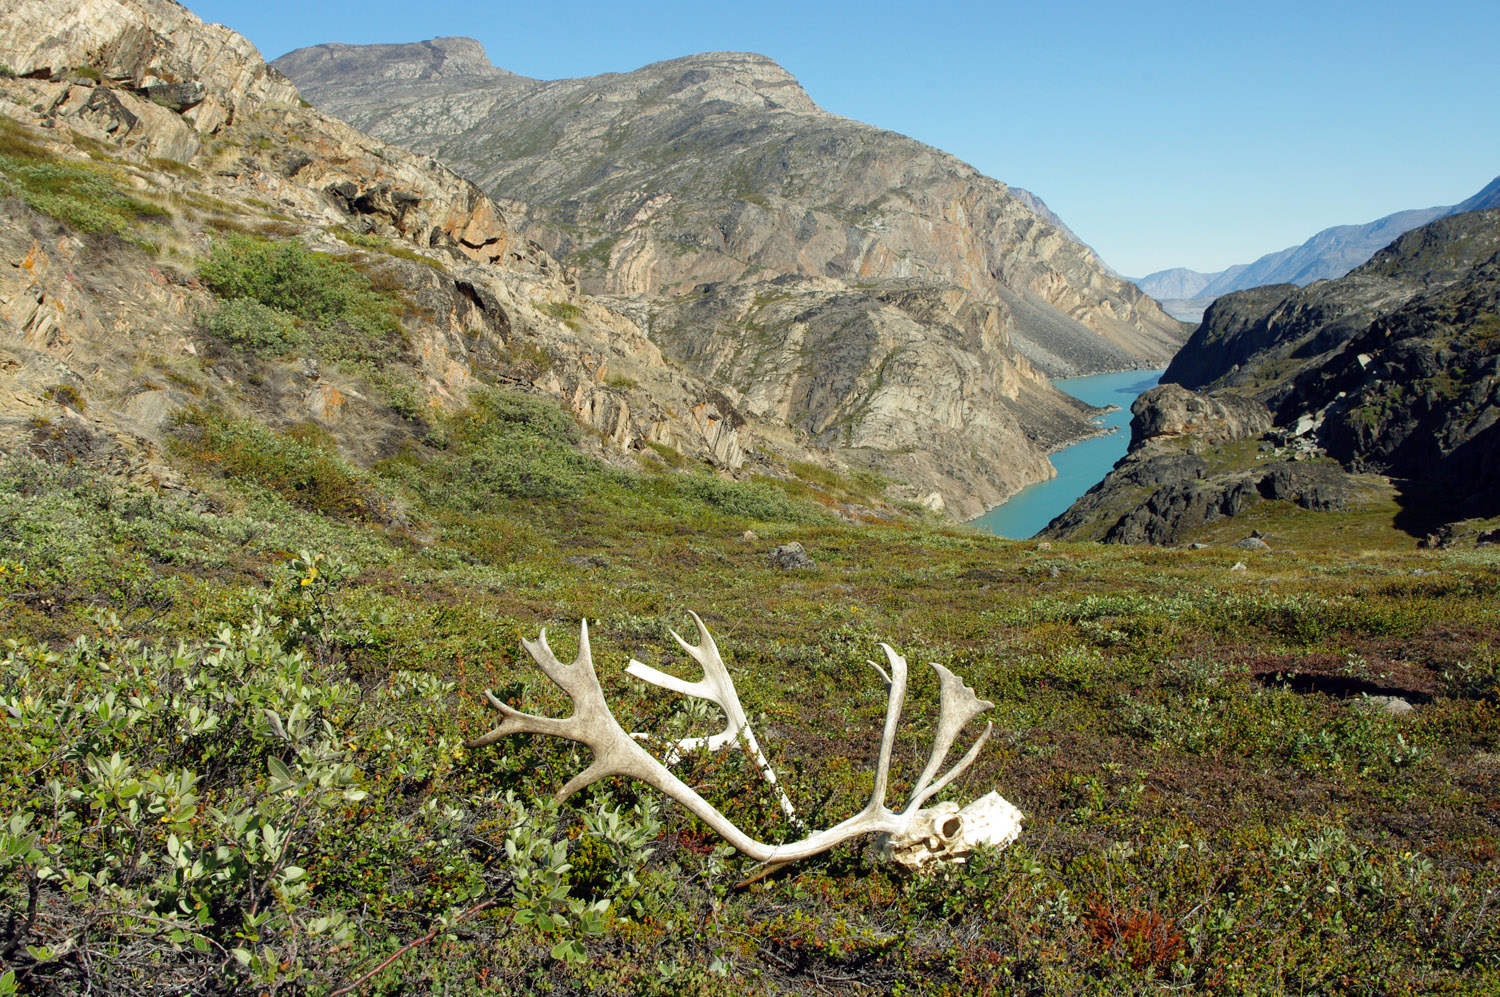 Sondre Stromfjord, Un-named Side Fjord with Caribou Skull, Greenland